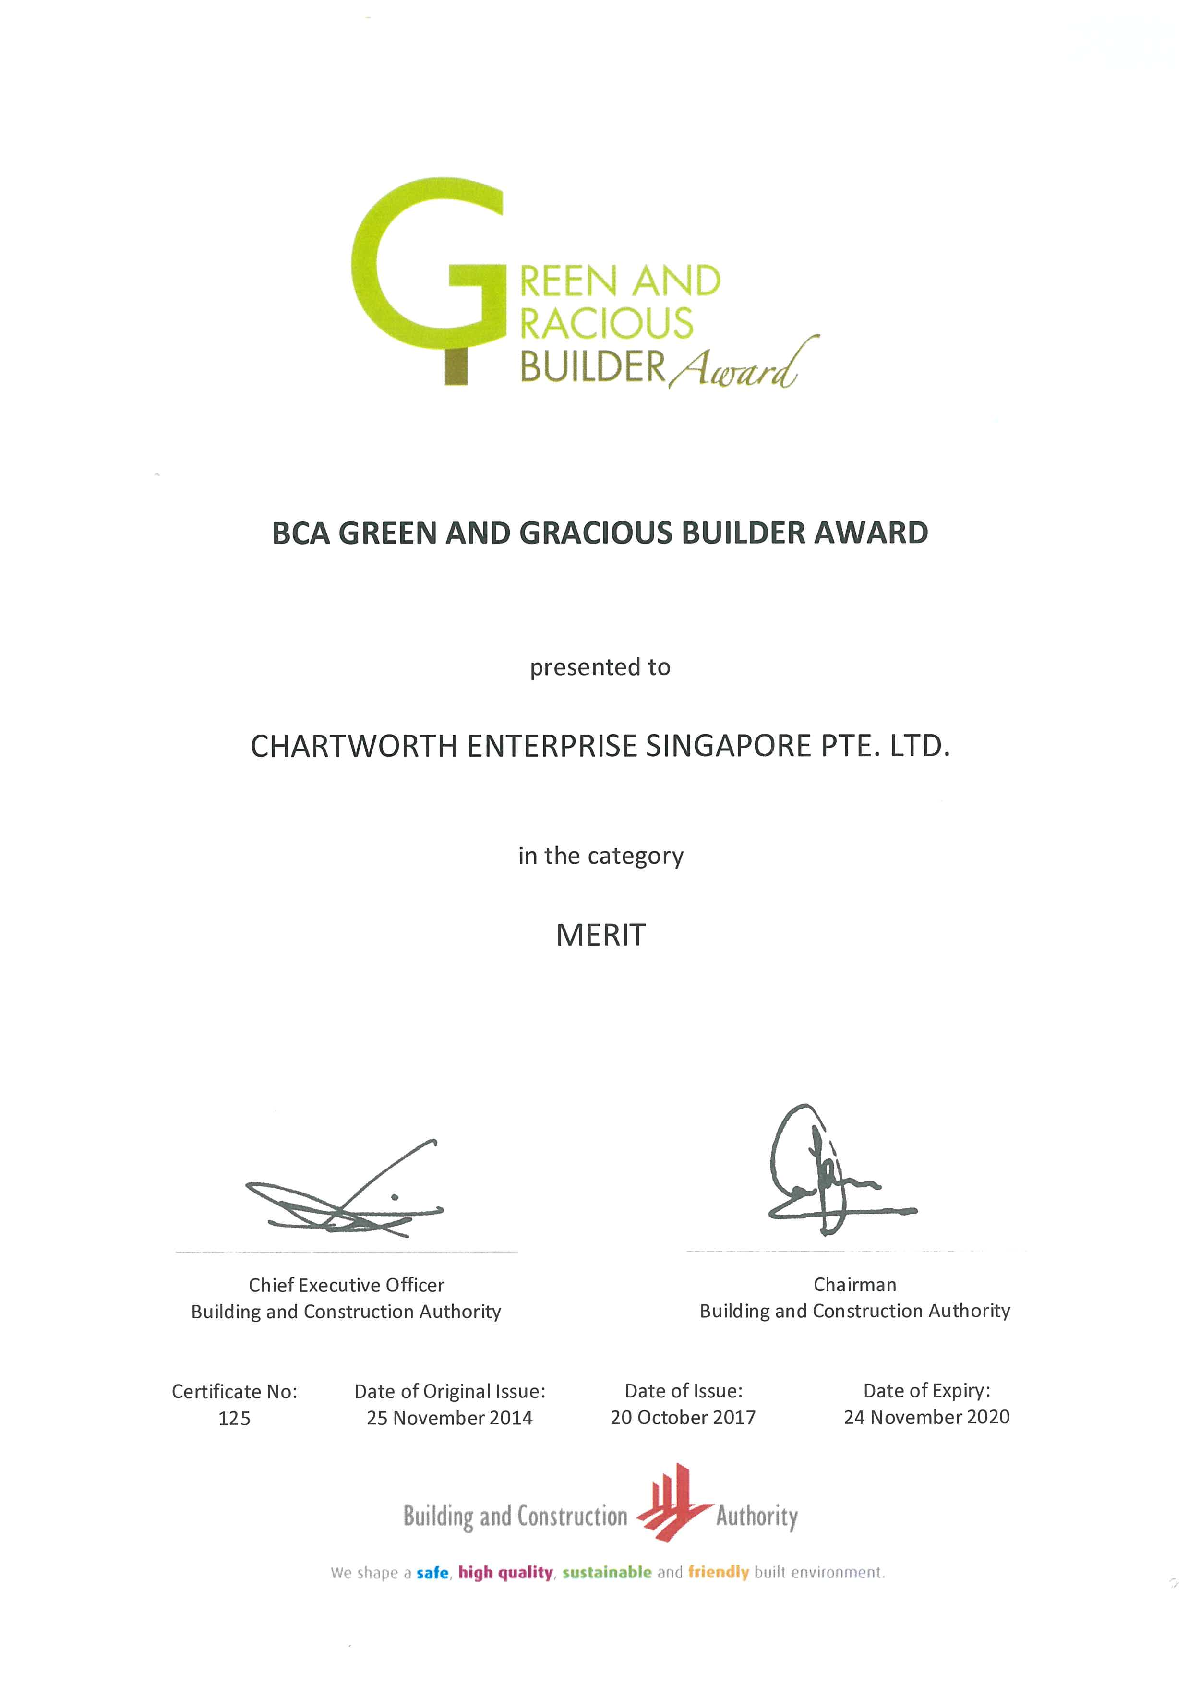 Green and Gracious Builder Award 2017-2020a1